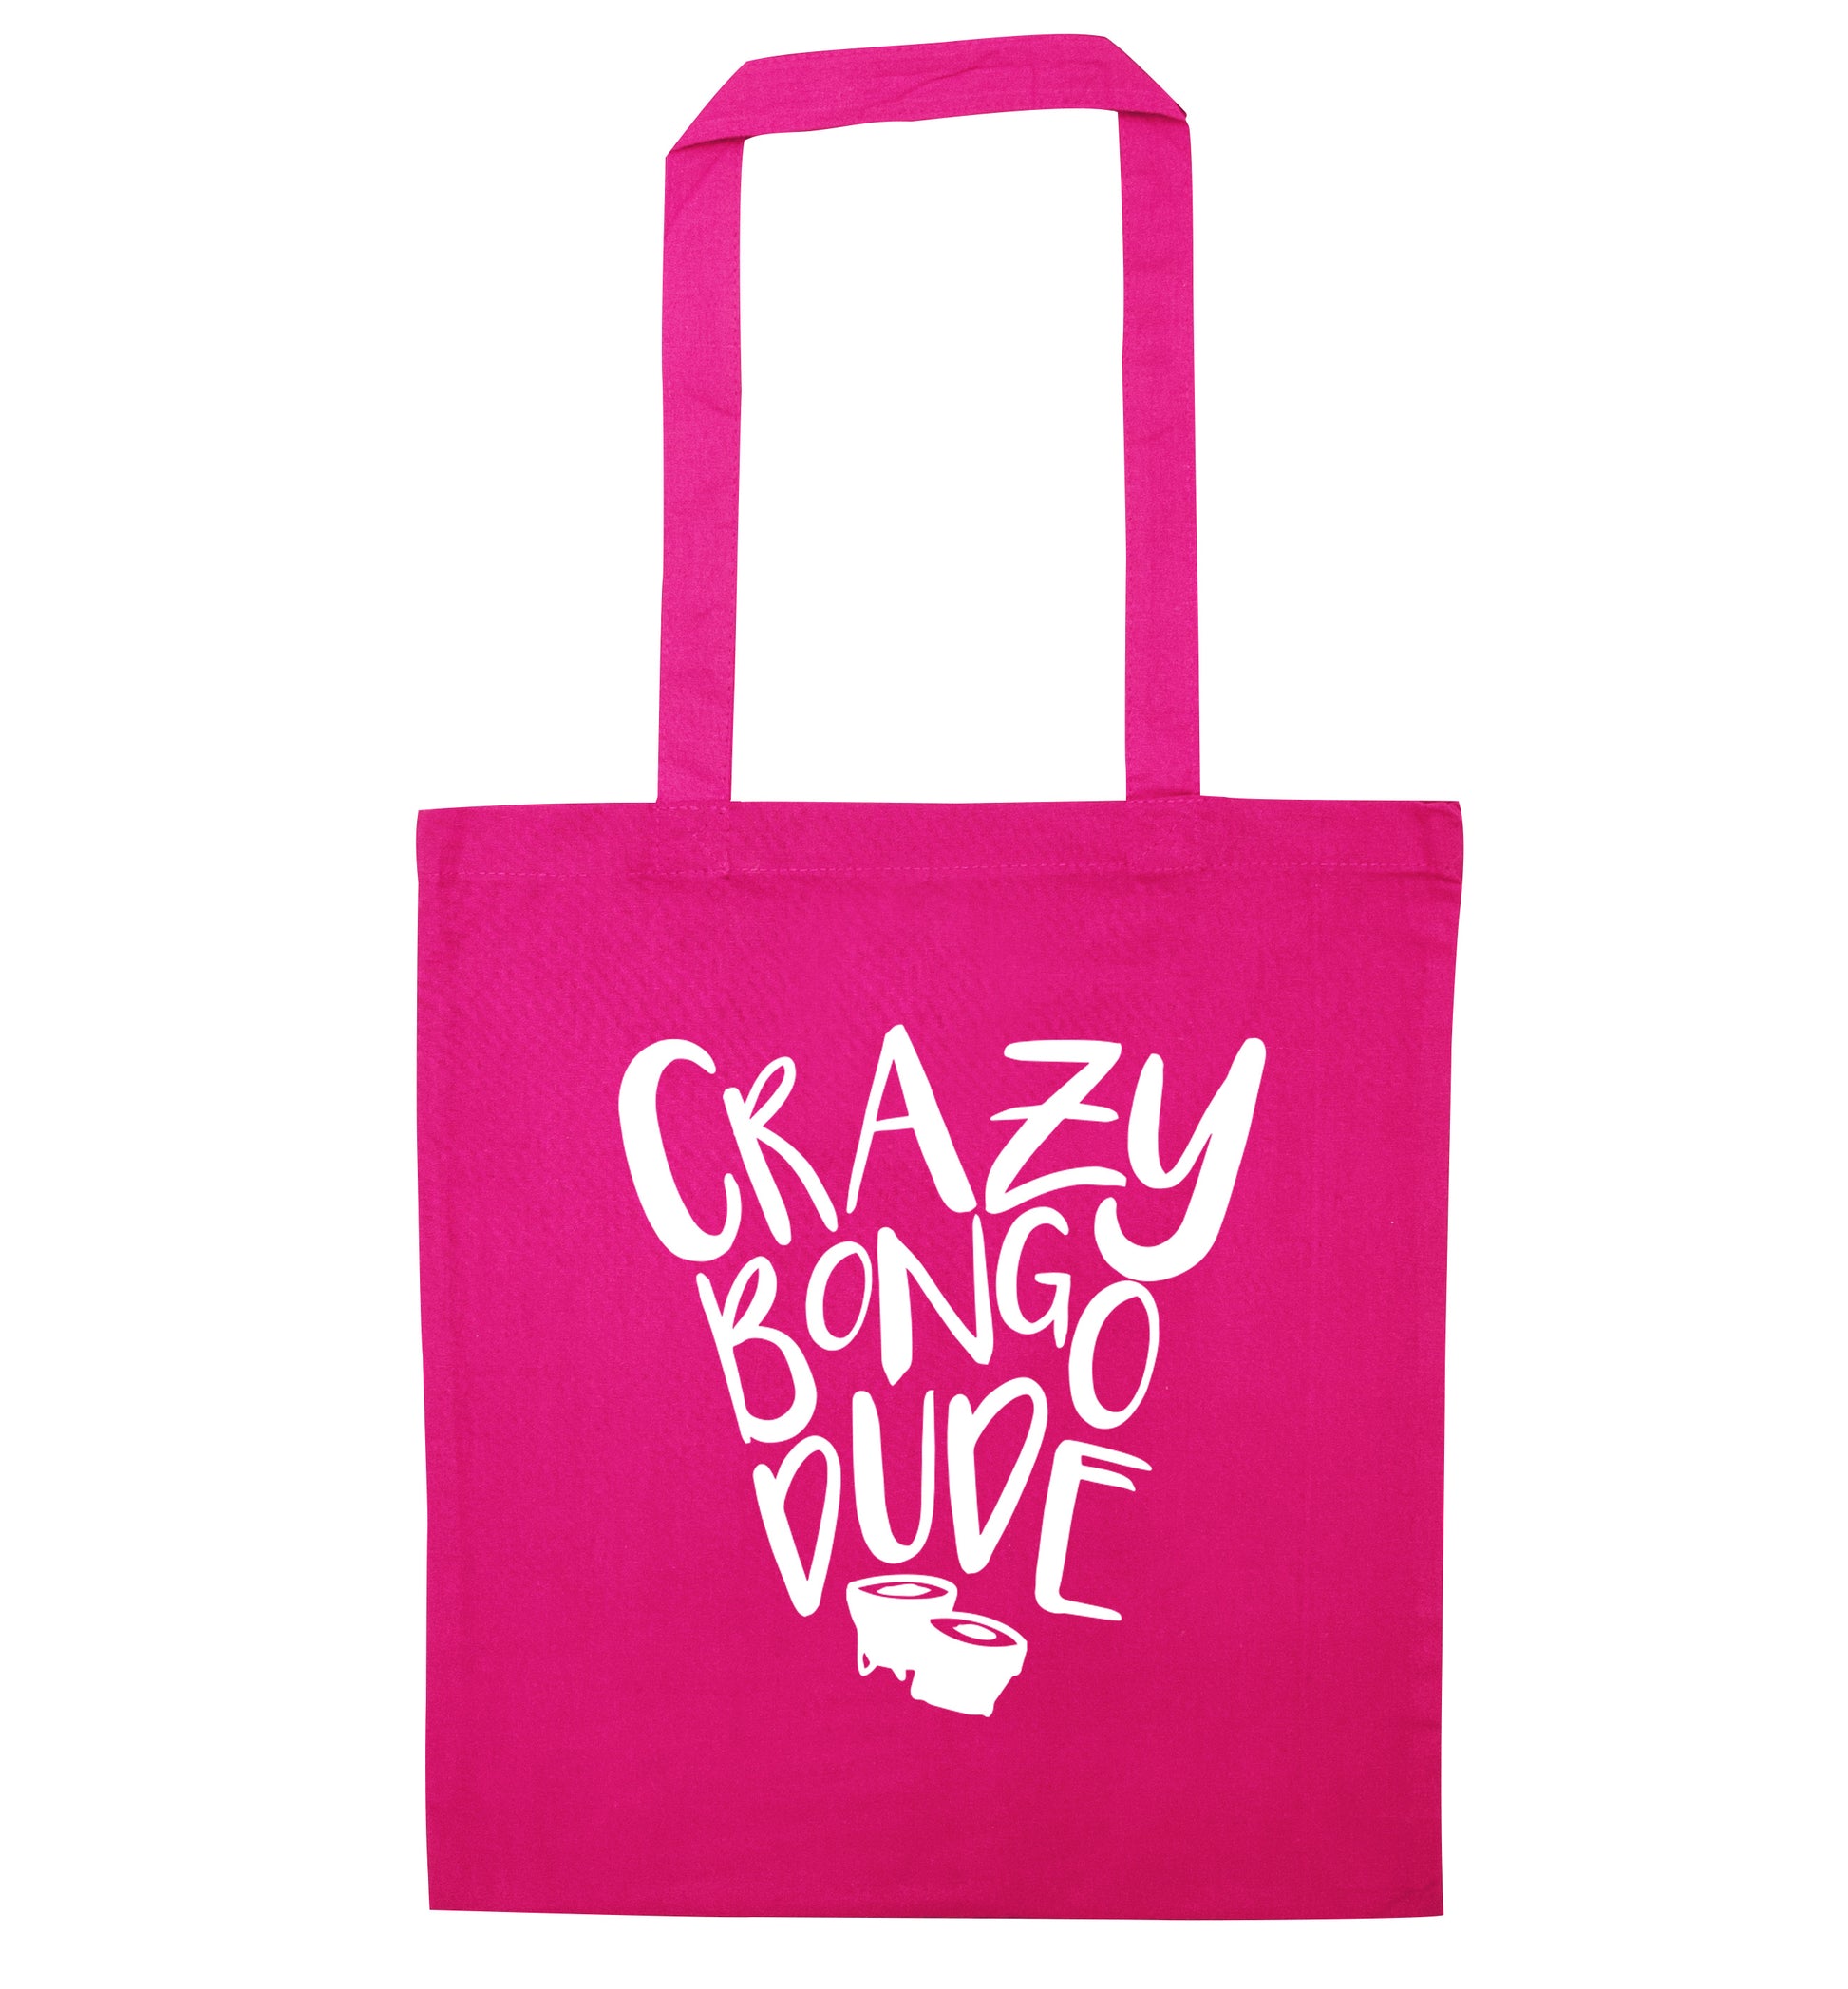 Crazy bongo dude pink tote bag